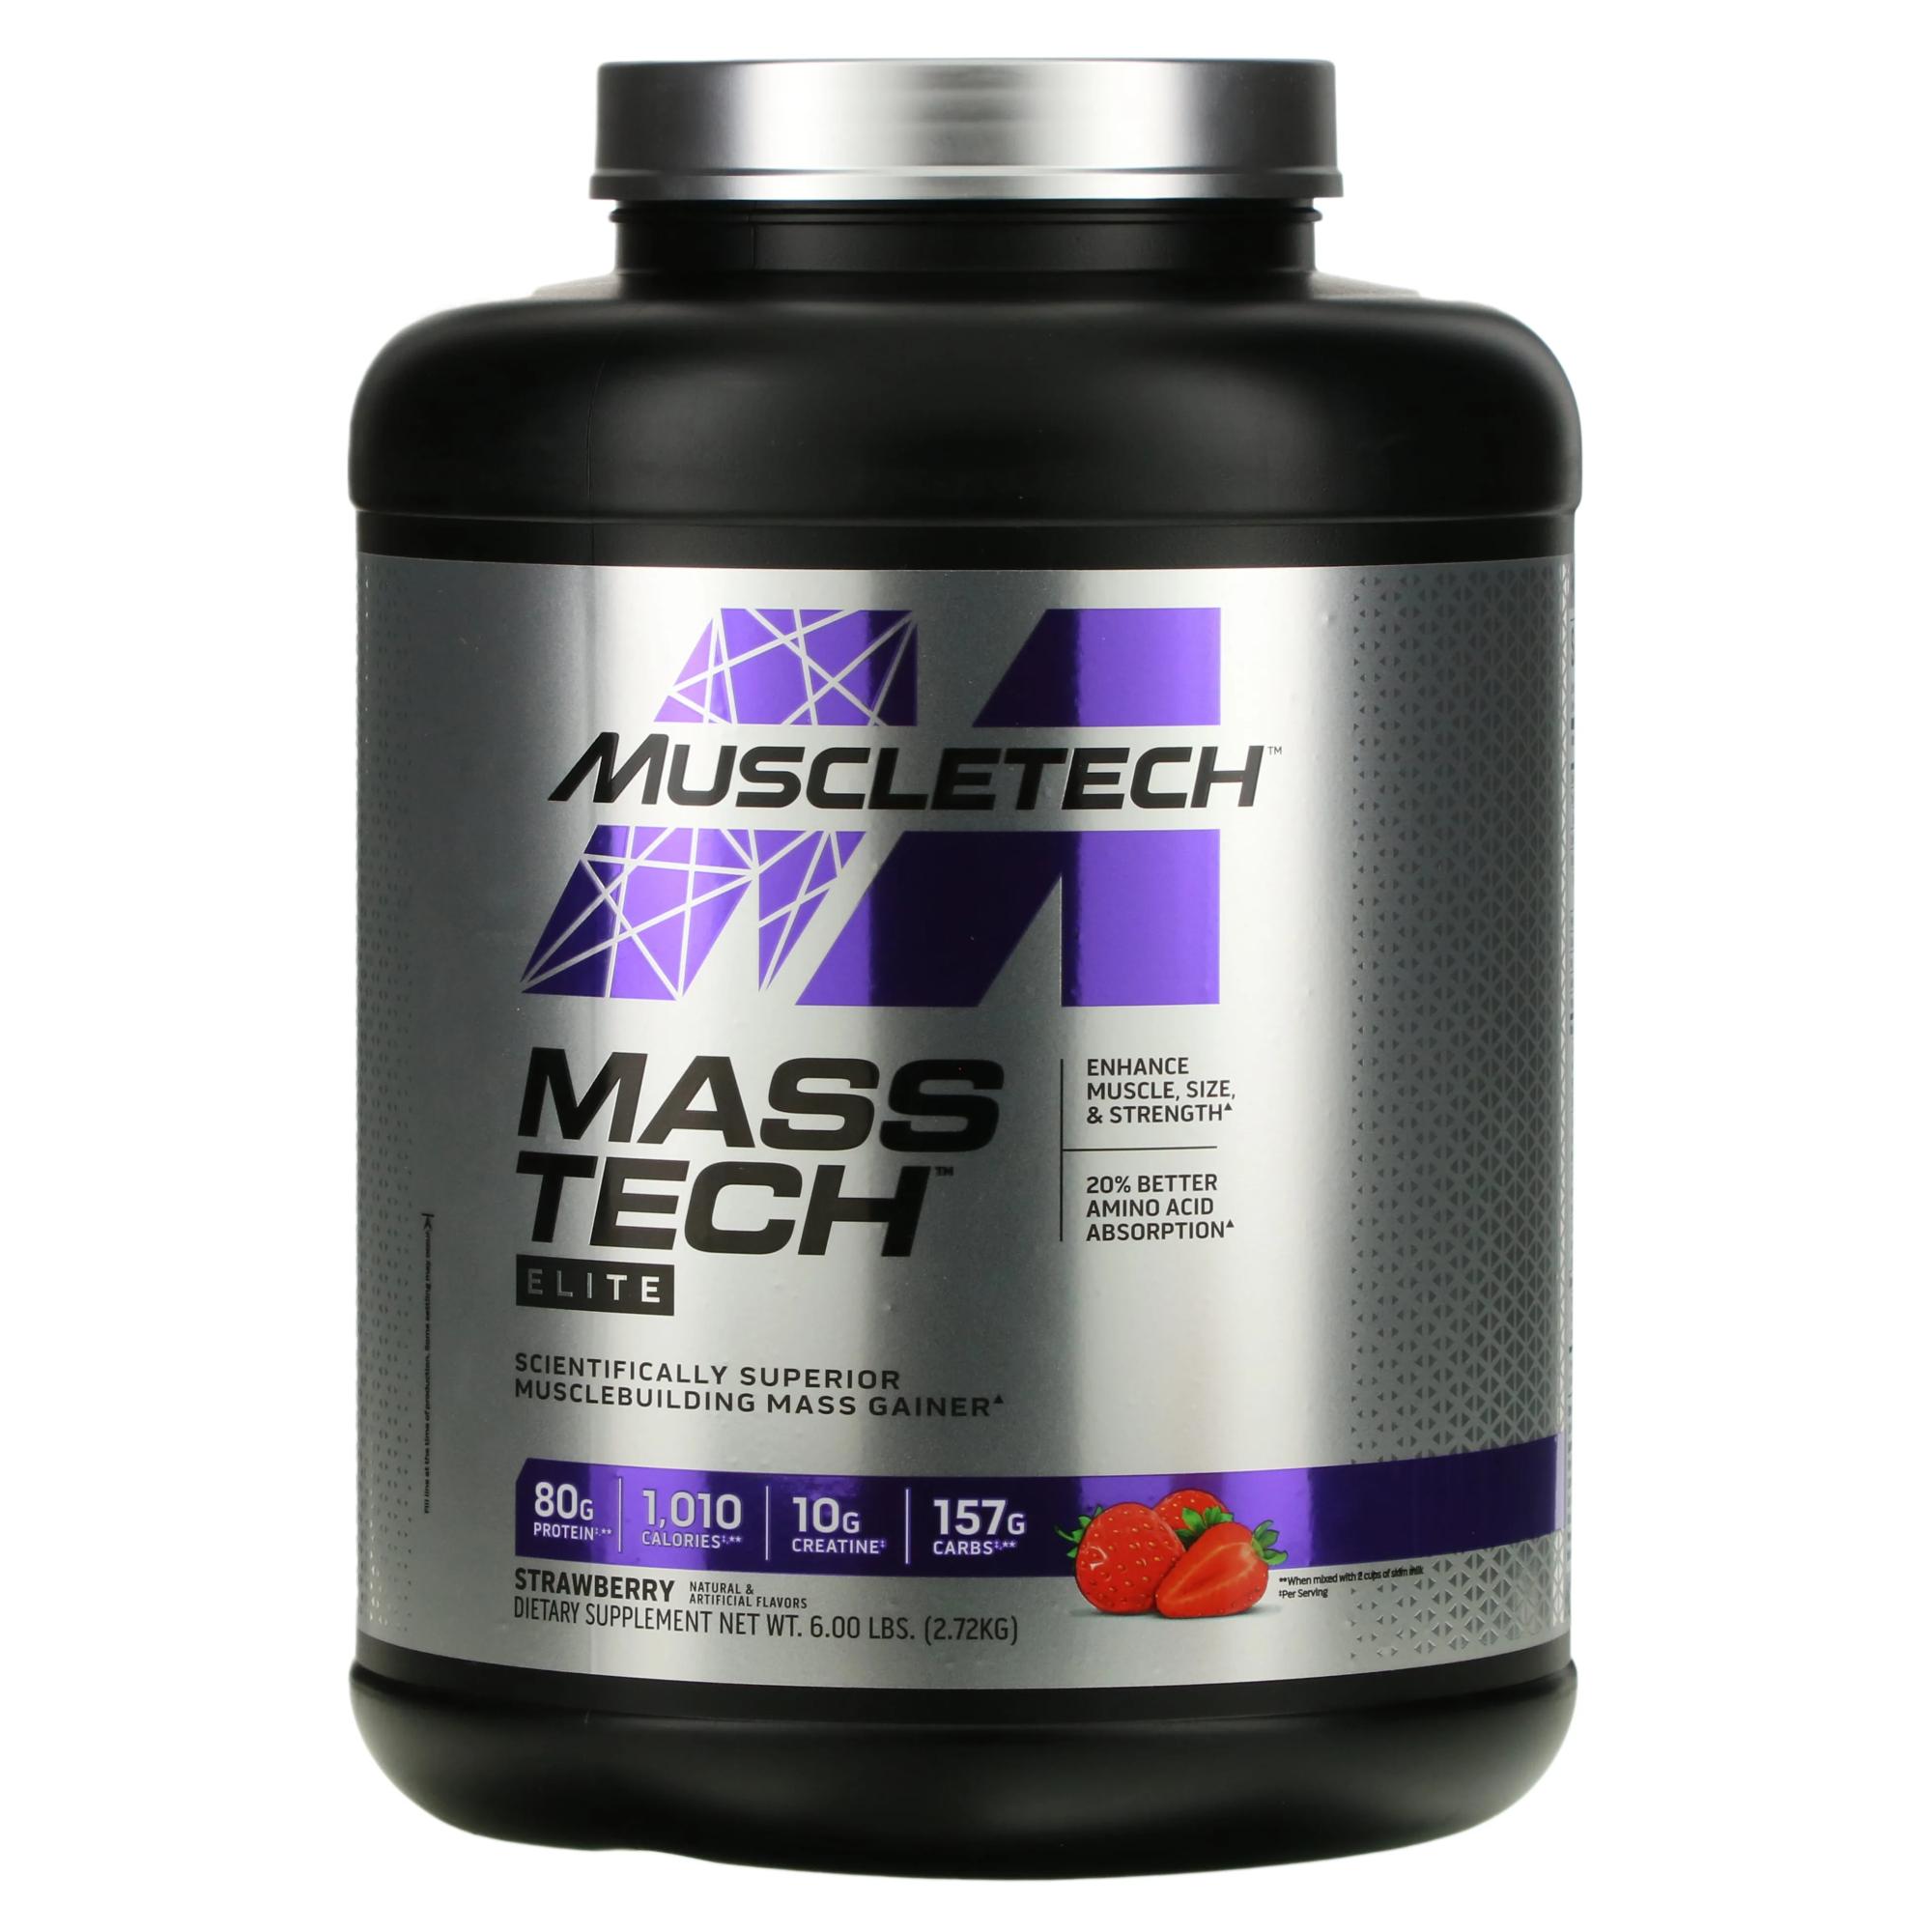 MuscleTech Mass Tech Elite клубника 2,72 кг (6 фунтов) muscletech mass tech extreme 2000 vanilla milkshake 6 lbs 2 72 kg